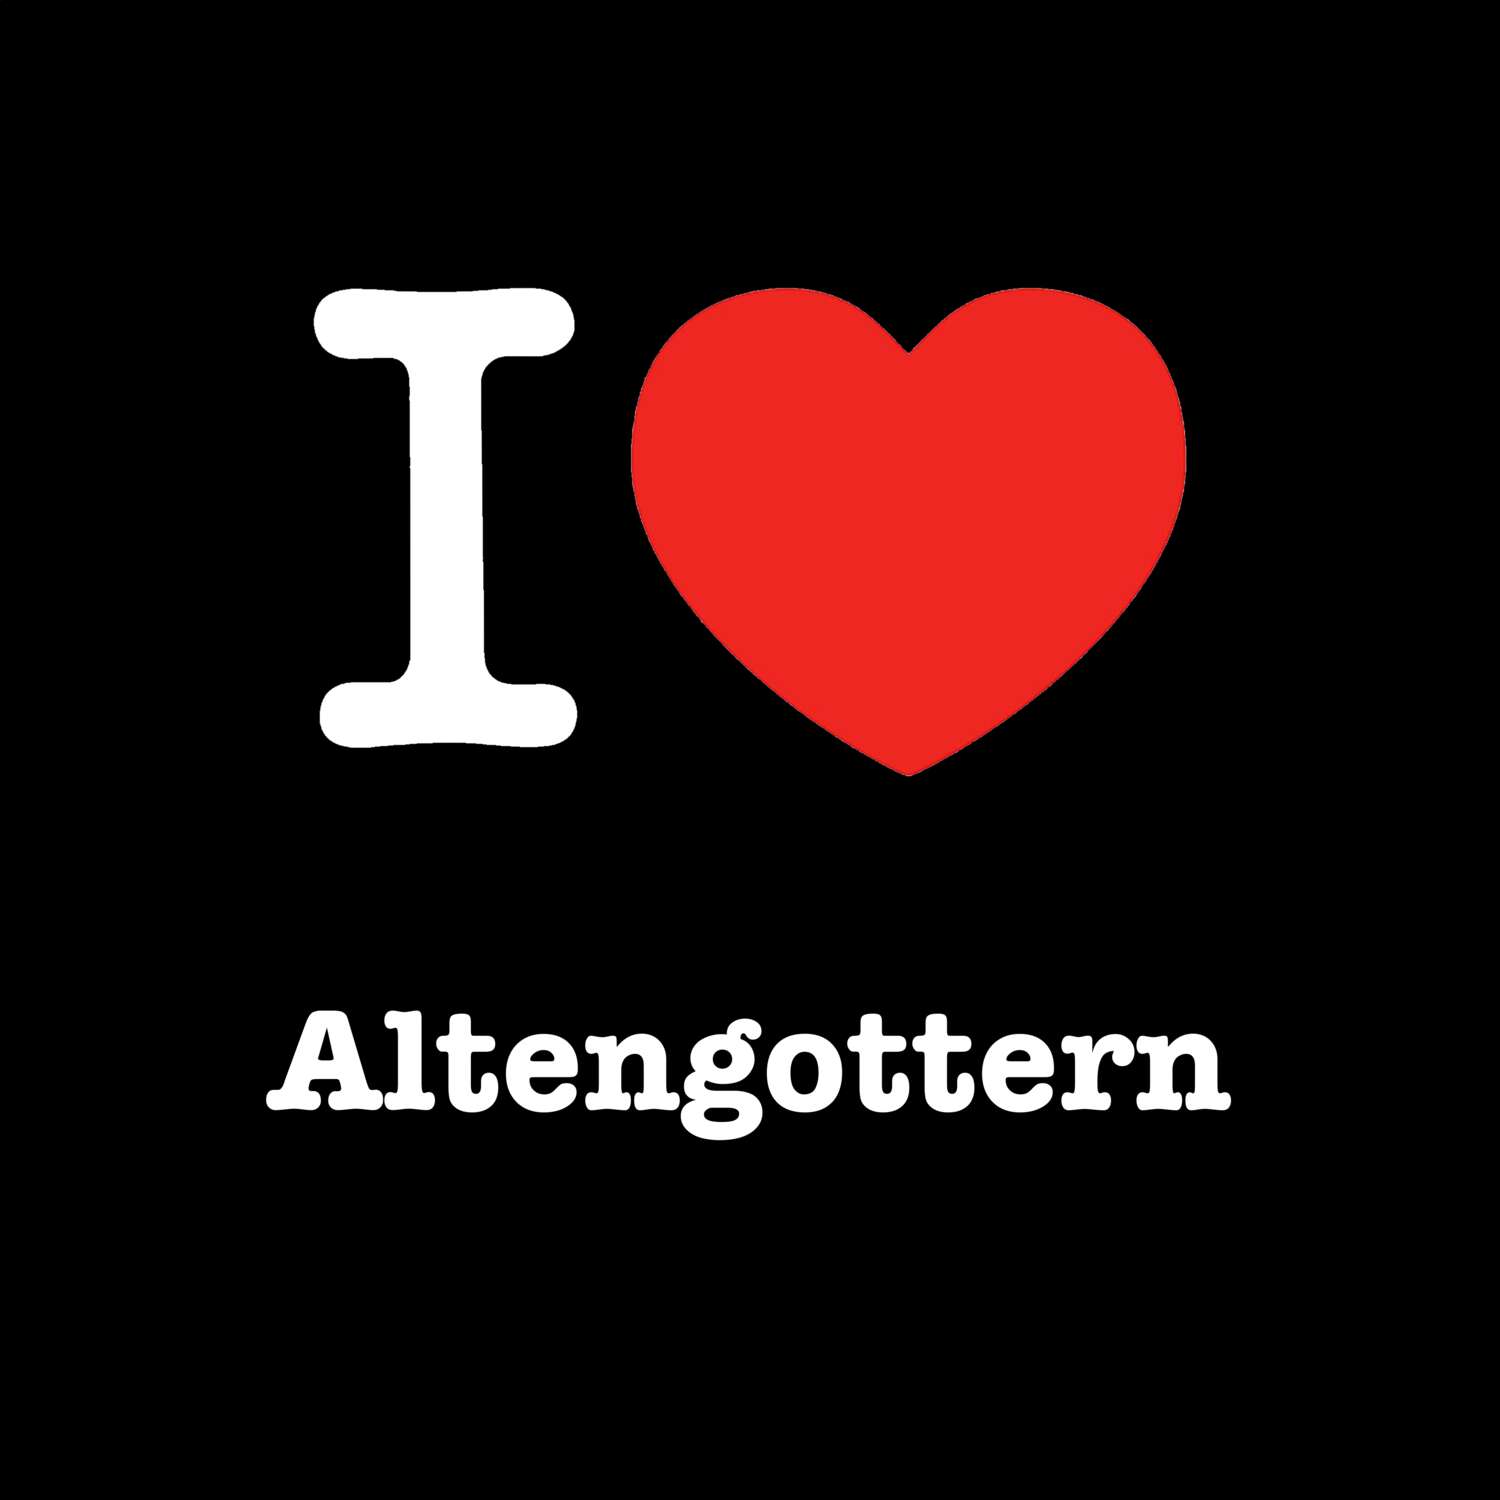 Altengottern T-Shirt »I love«